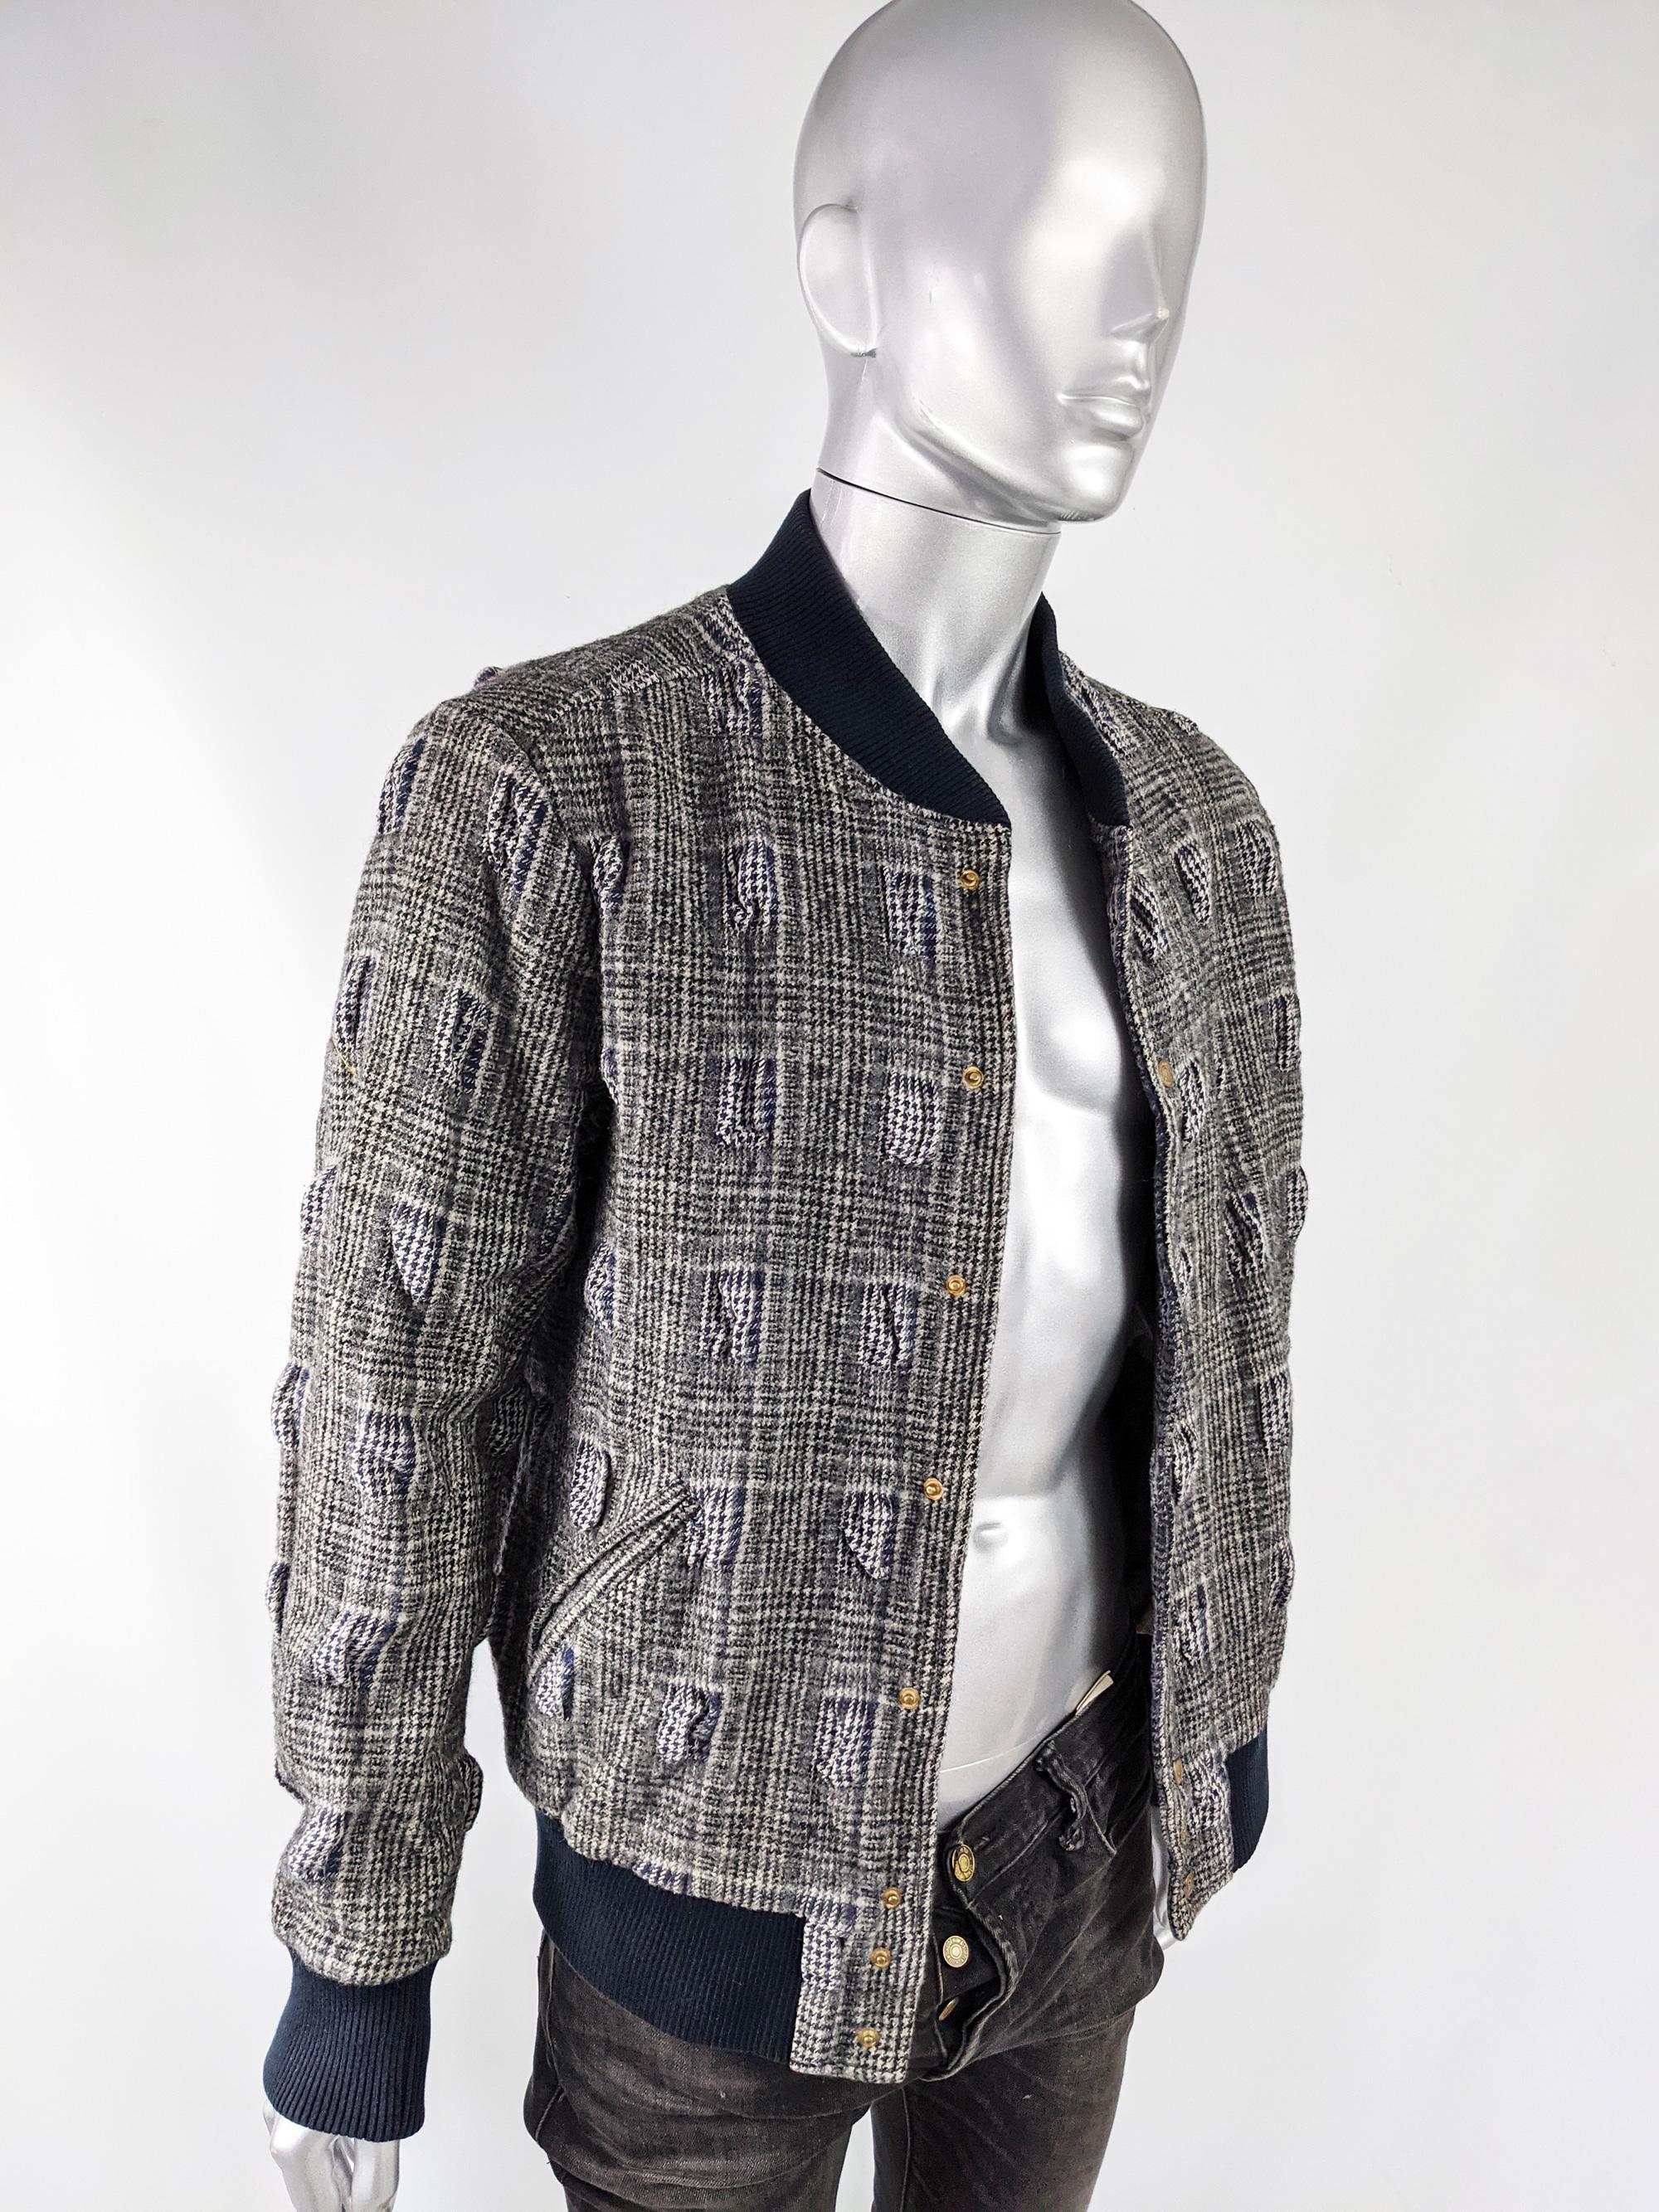 Gray John Galliano Mens Prince of Wales Check Textured Wool Bomber Jacket, 2000s